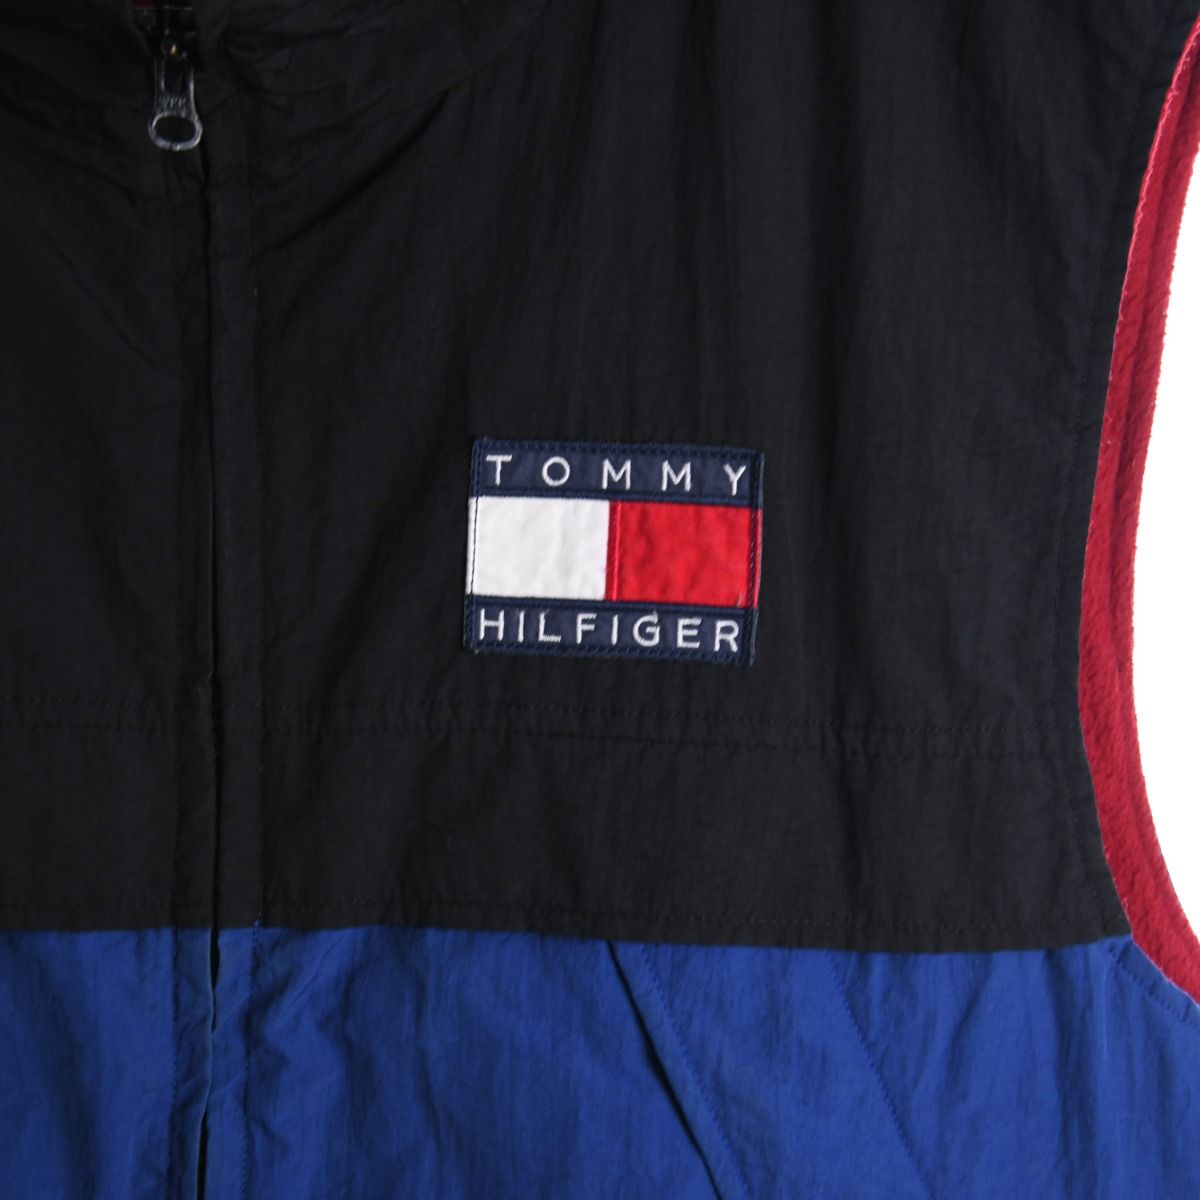 Tommy Hilfiger 1990s Fleece Lined Gilet